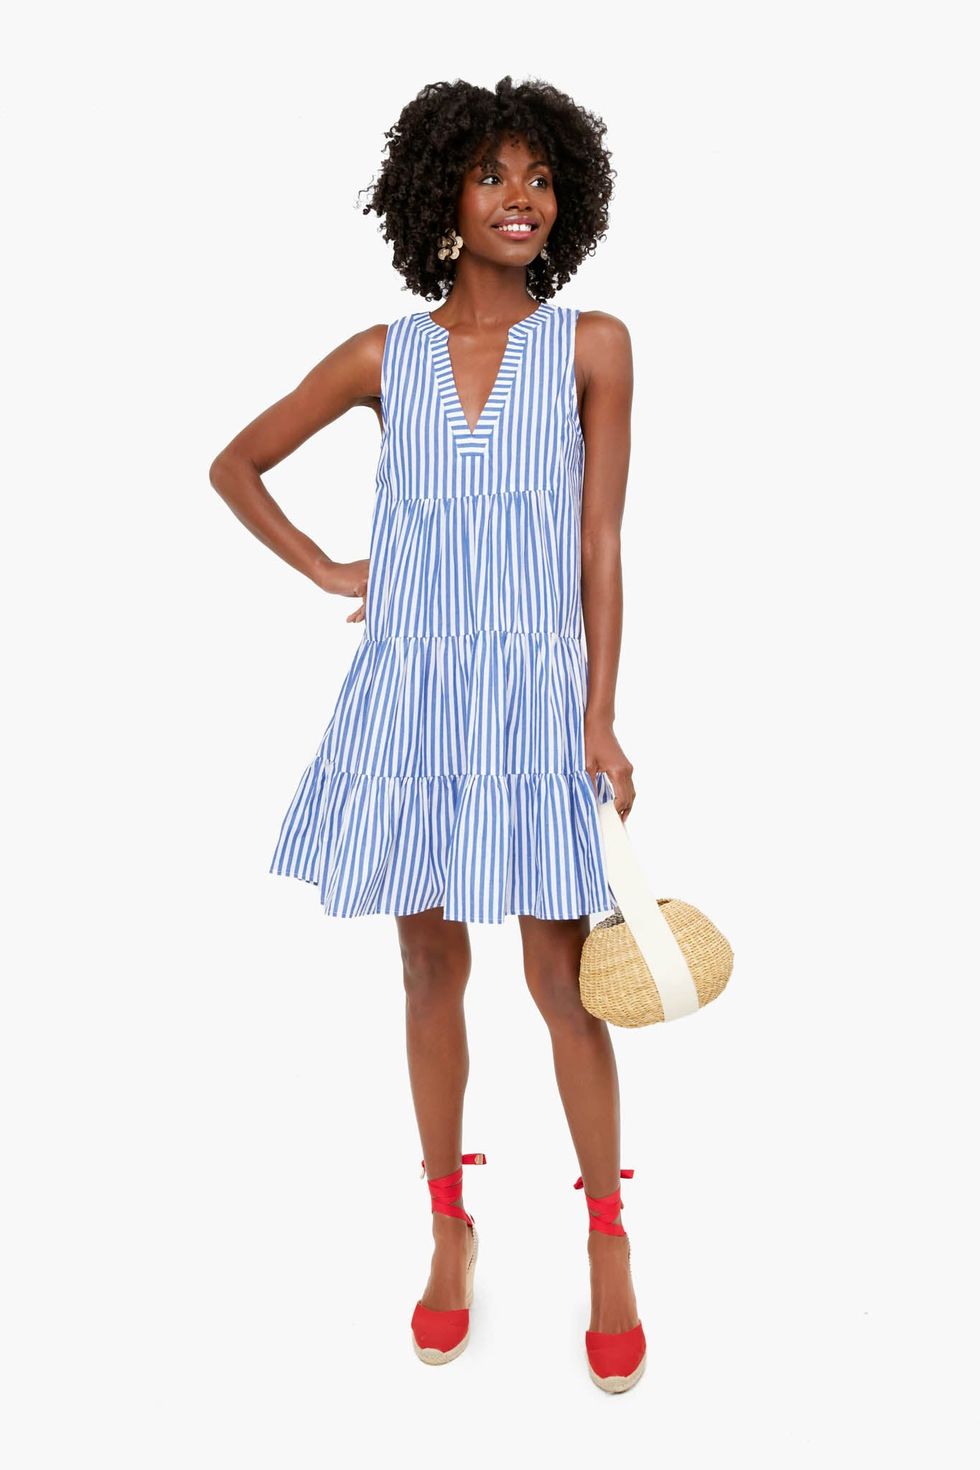 Latest Best Design Summer Dresses for Girls and Women - Top10Sense